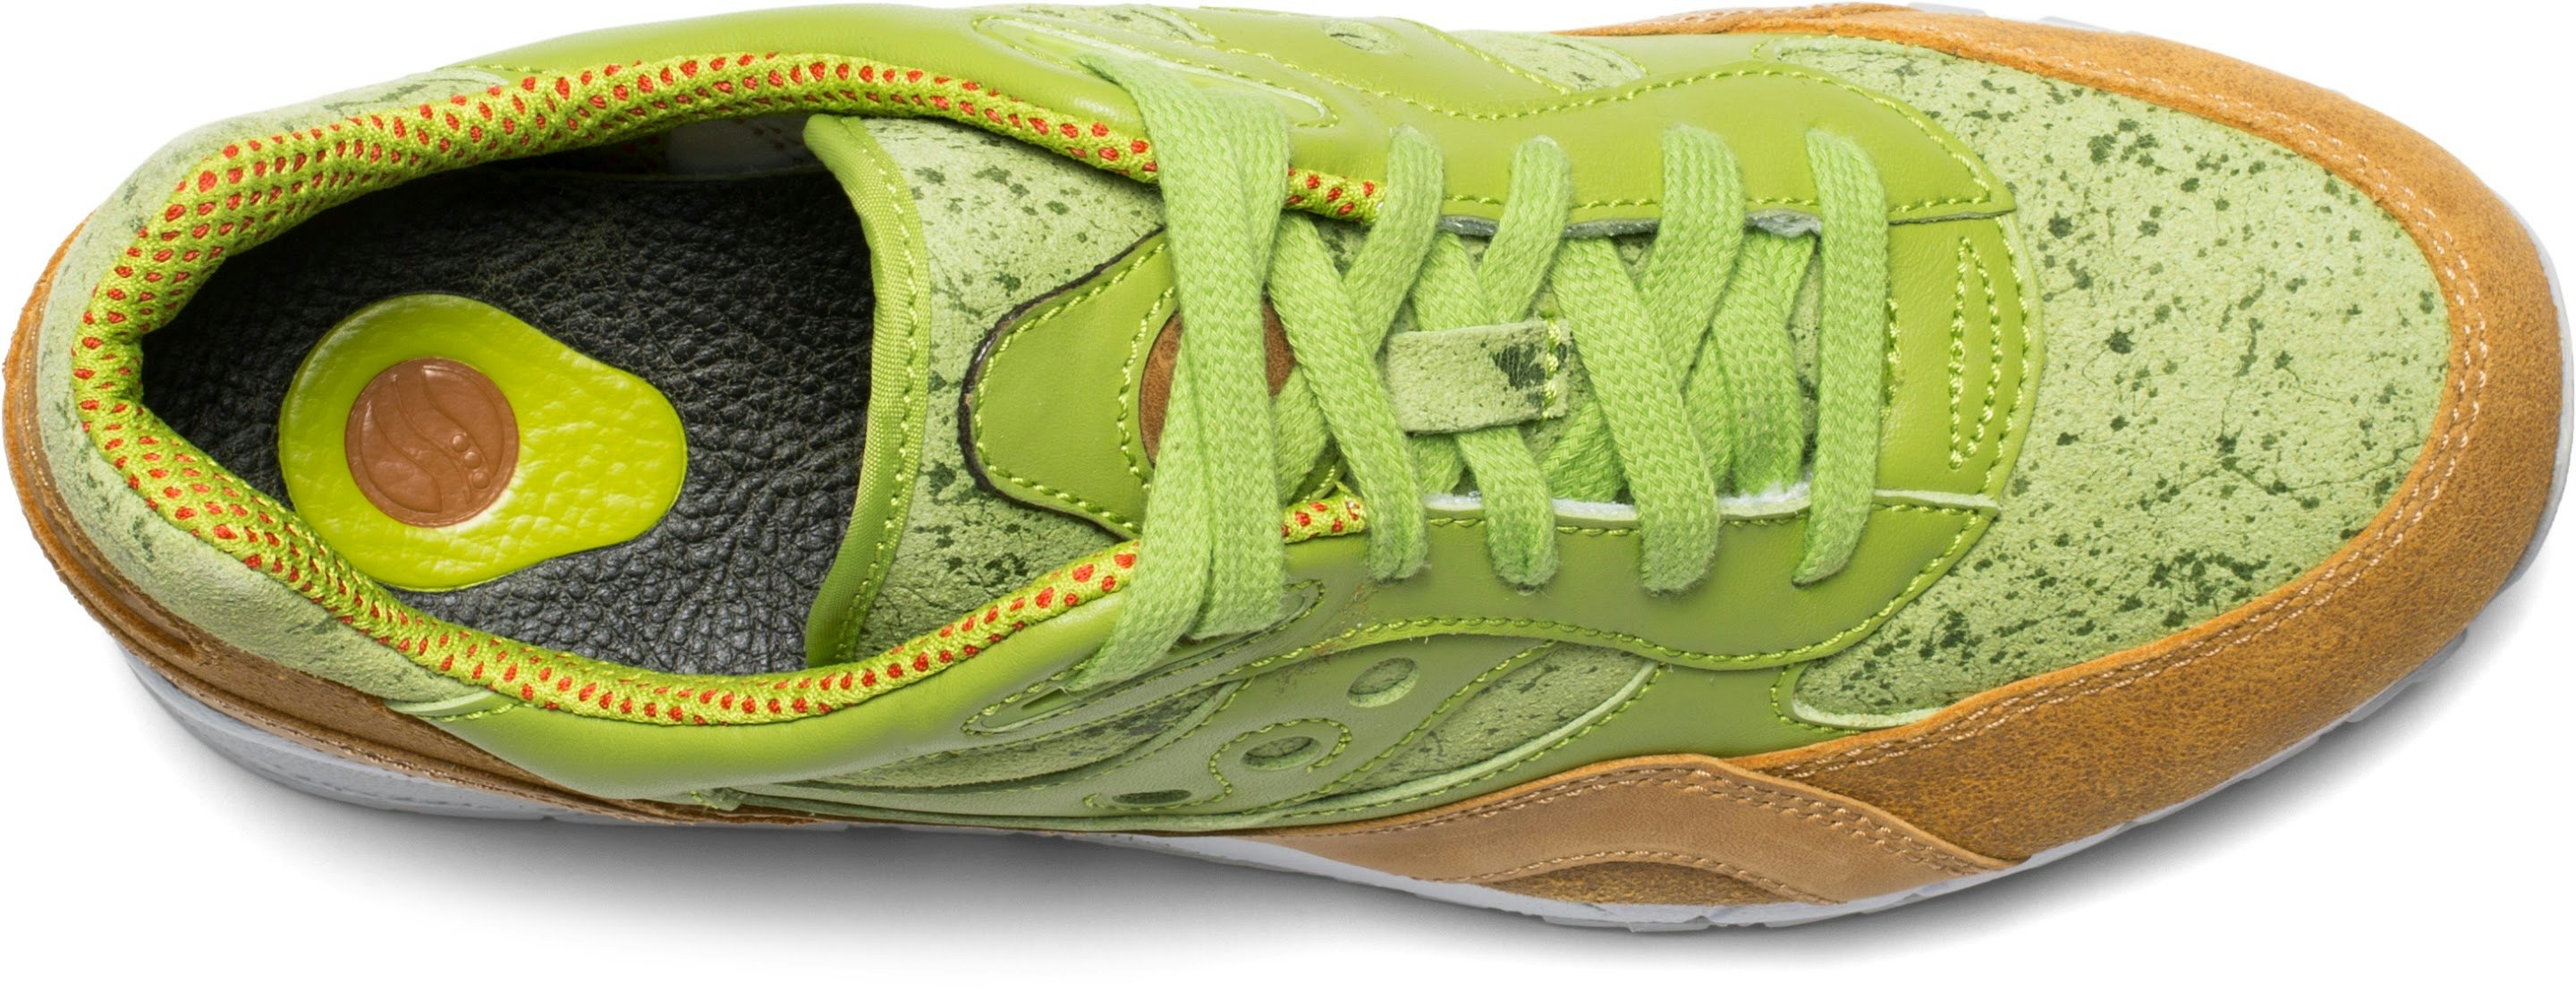 avocado sneakers